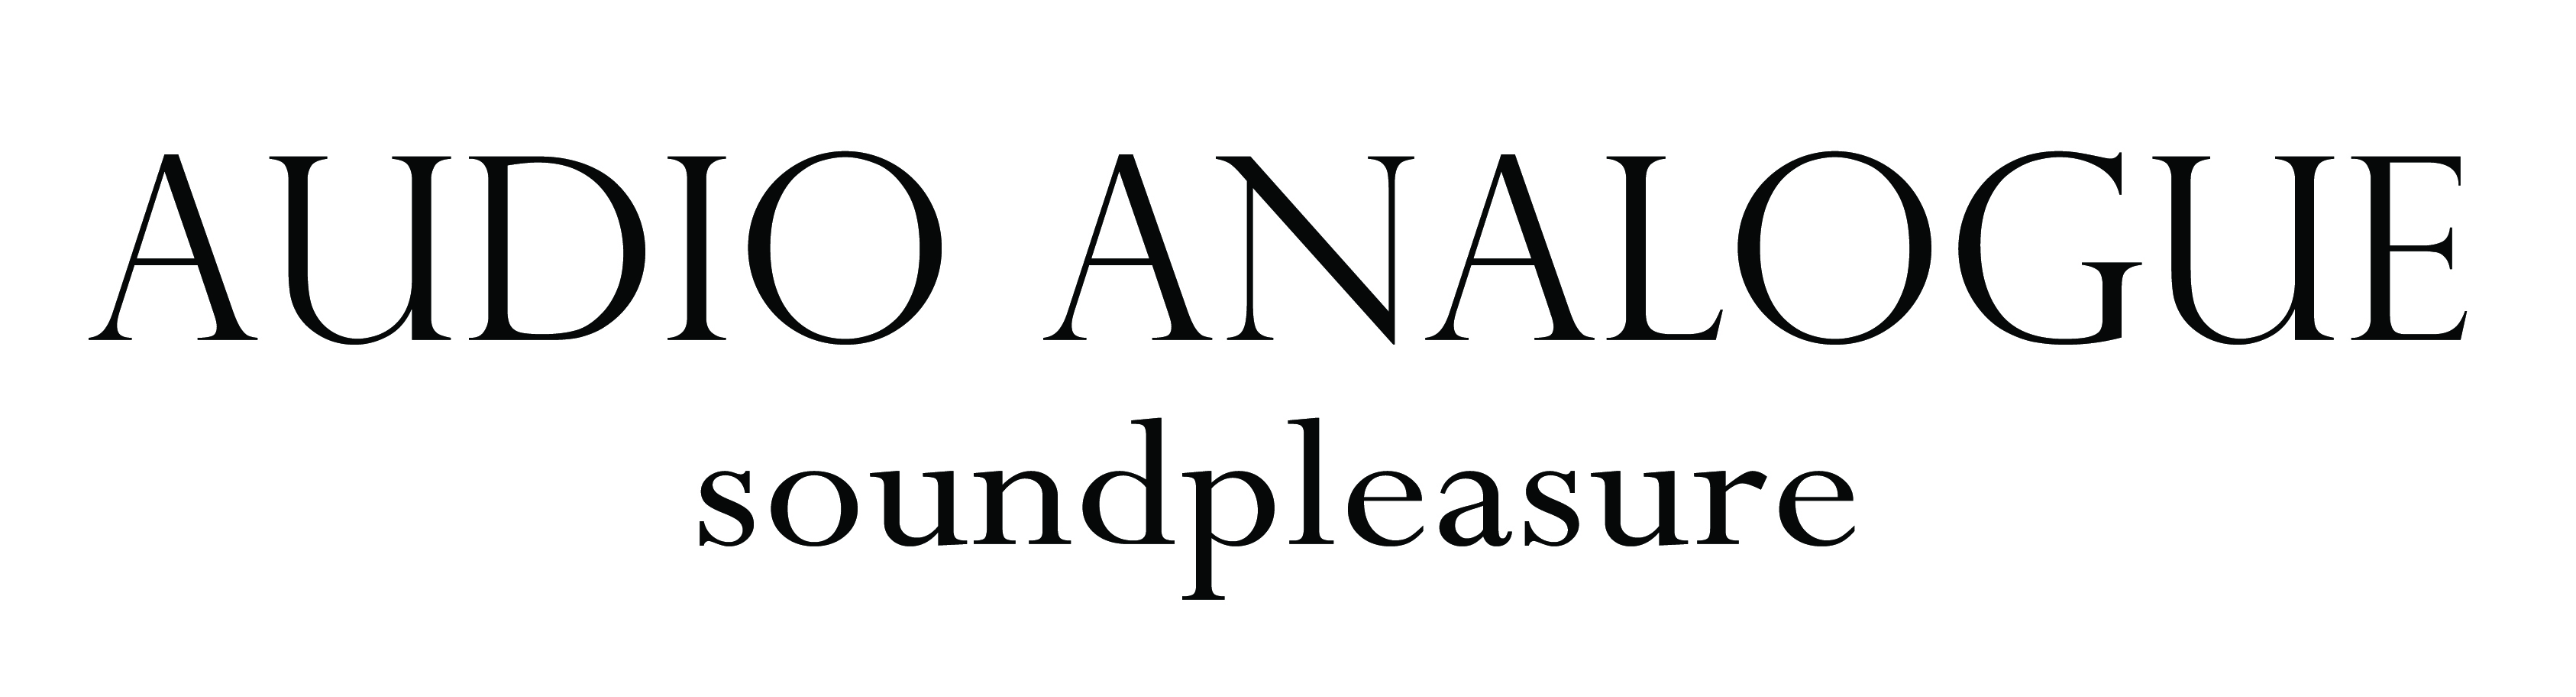 Audio Analogue logo